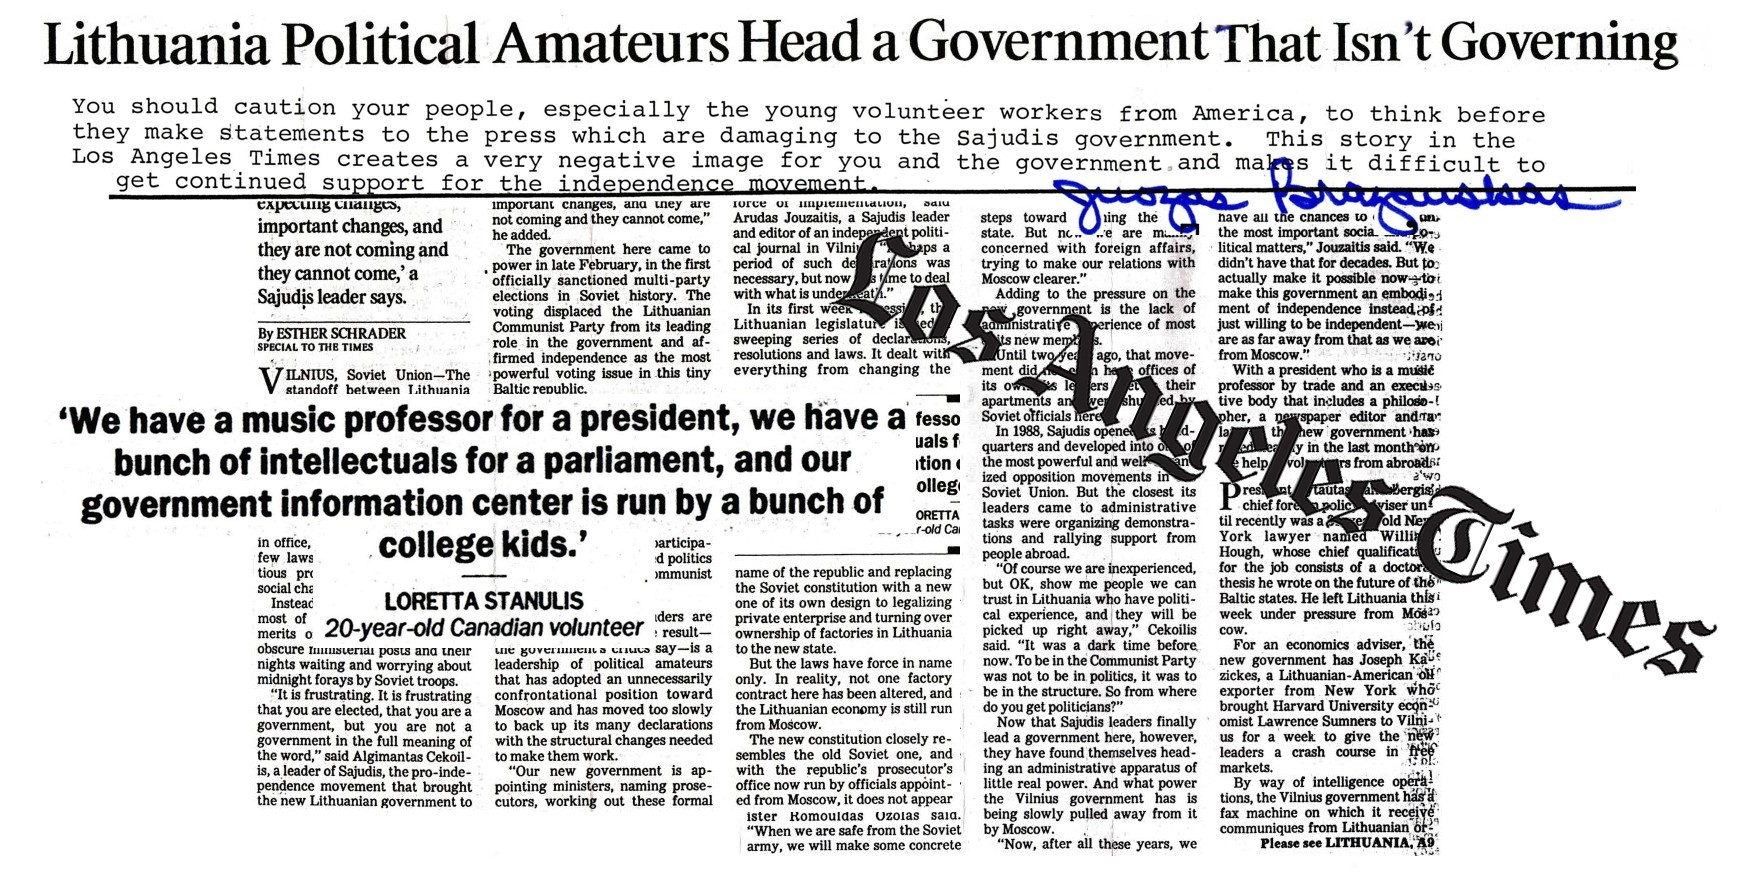 April 6, 1990